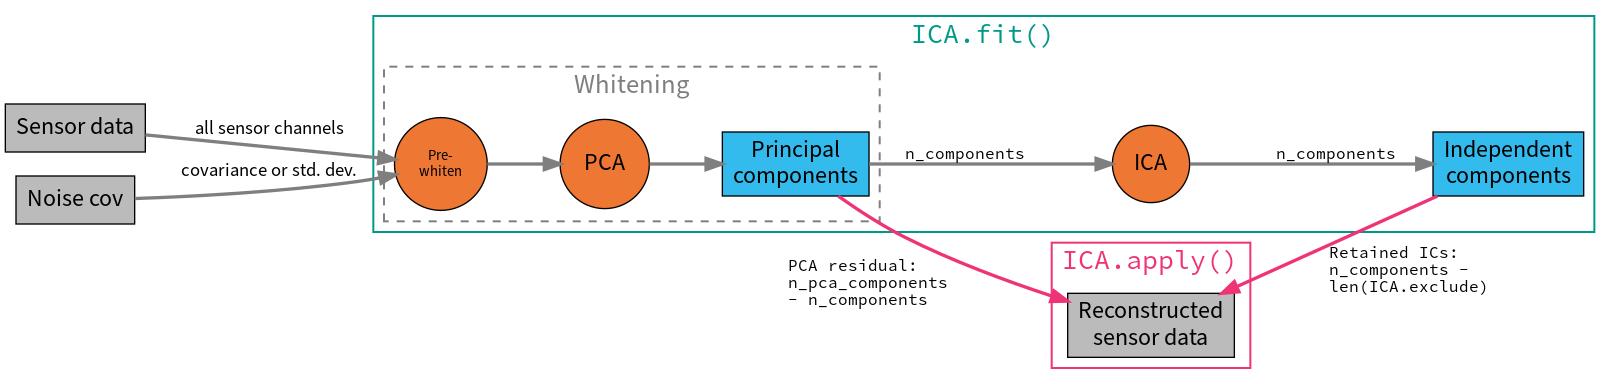 Diagram of ICA procedure in MNE-Python